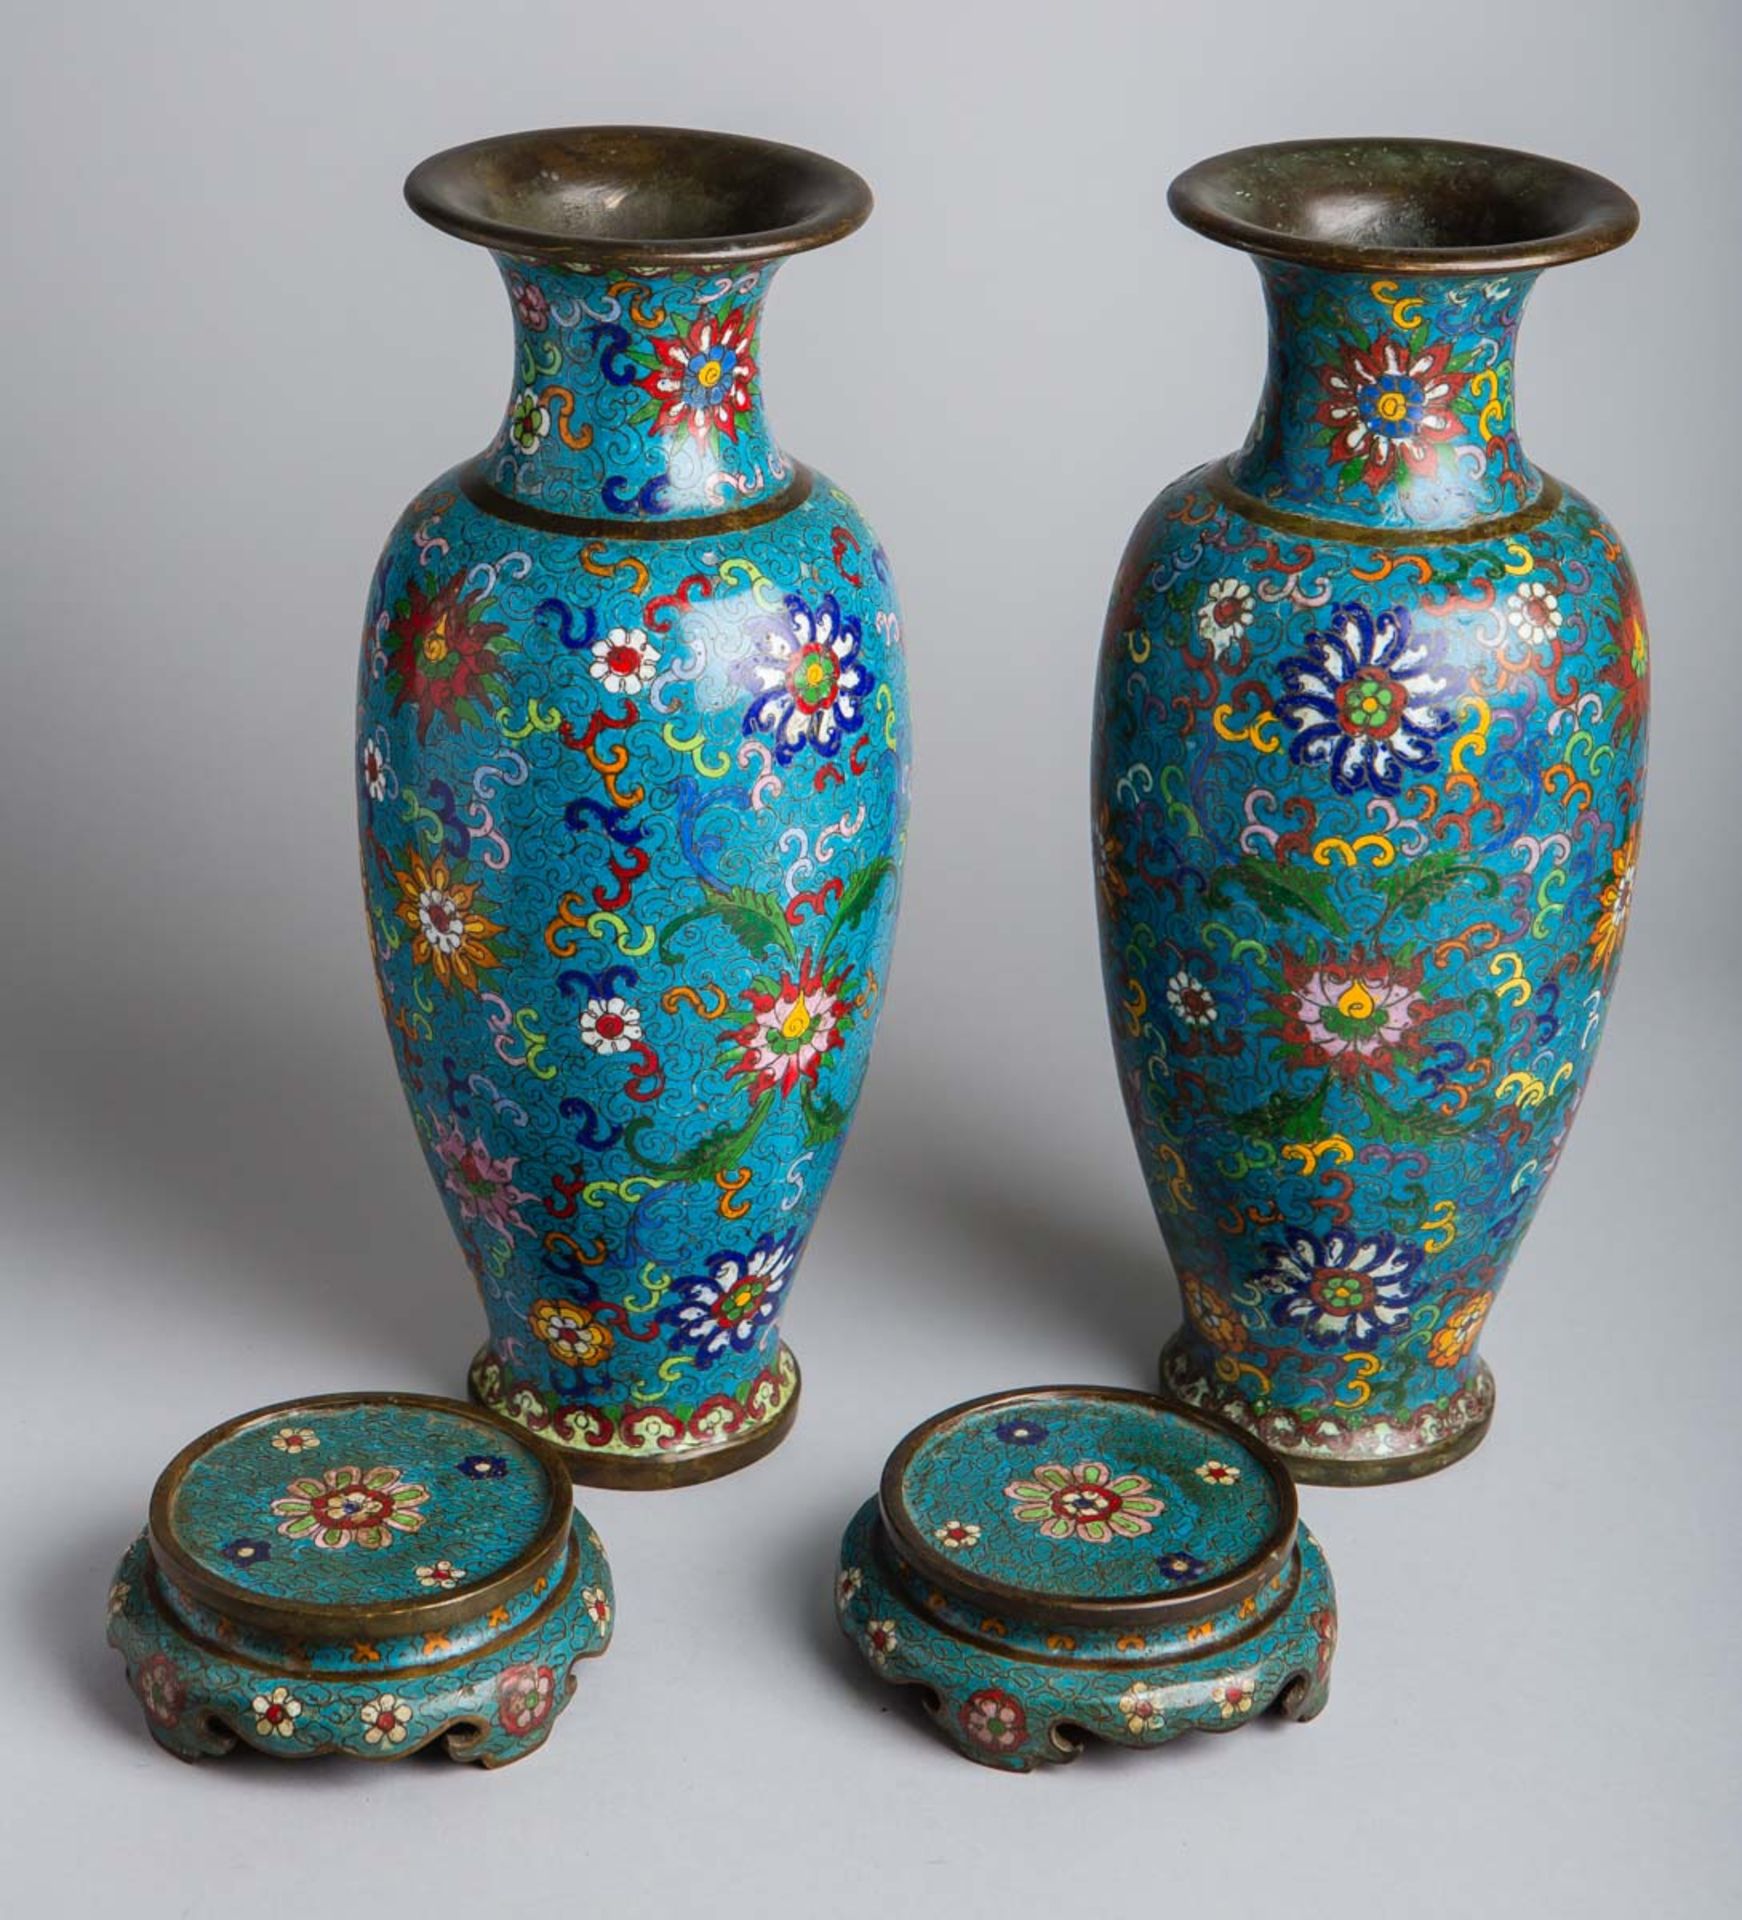 2-teiliges Set von Cloisonné-Vasen m. passenden Sockeln (China, Qing-Dynastie, wohl 16./17. Jh.) - Image 2 of 4